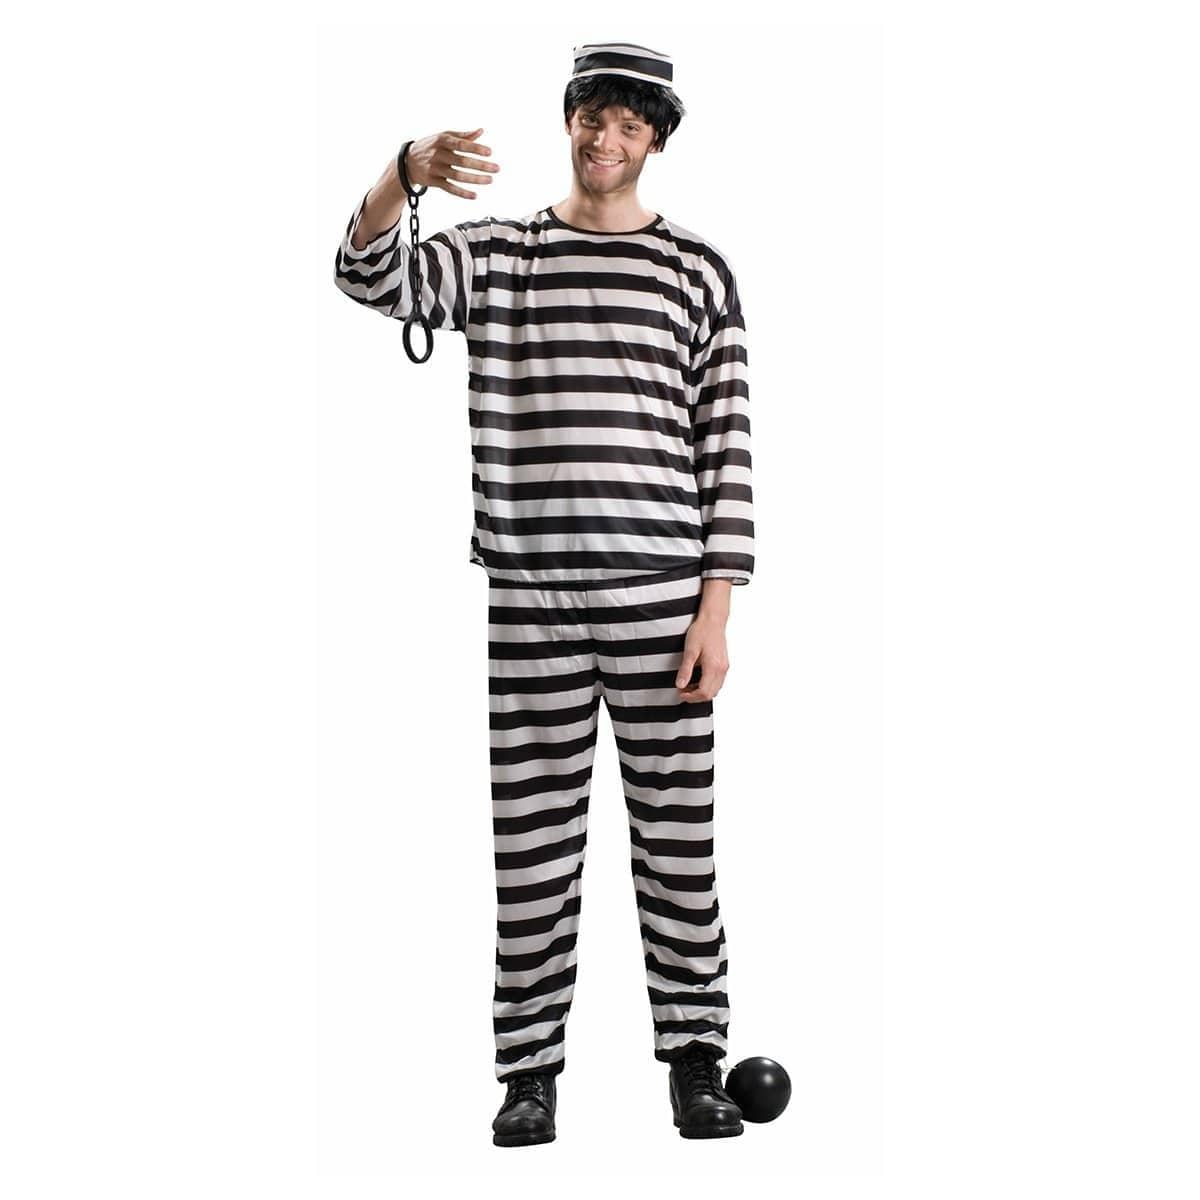 FORUM NOVELTIES INC Costumes Prisoner Costume for Adults 721773634284